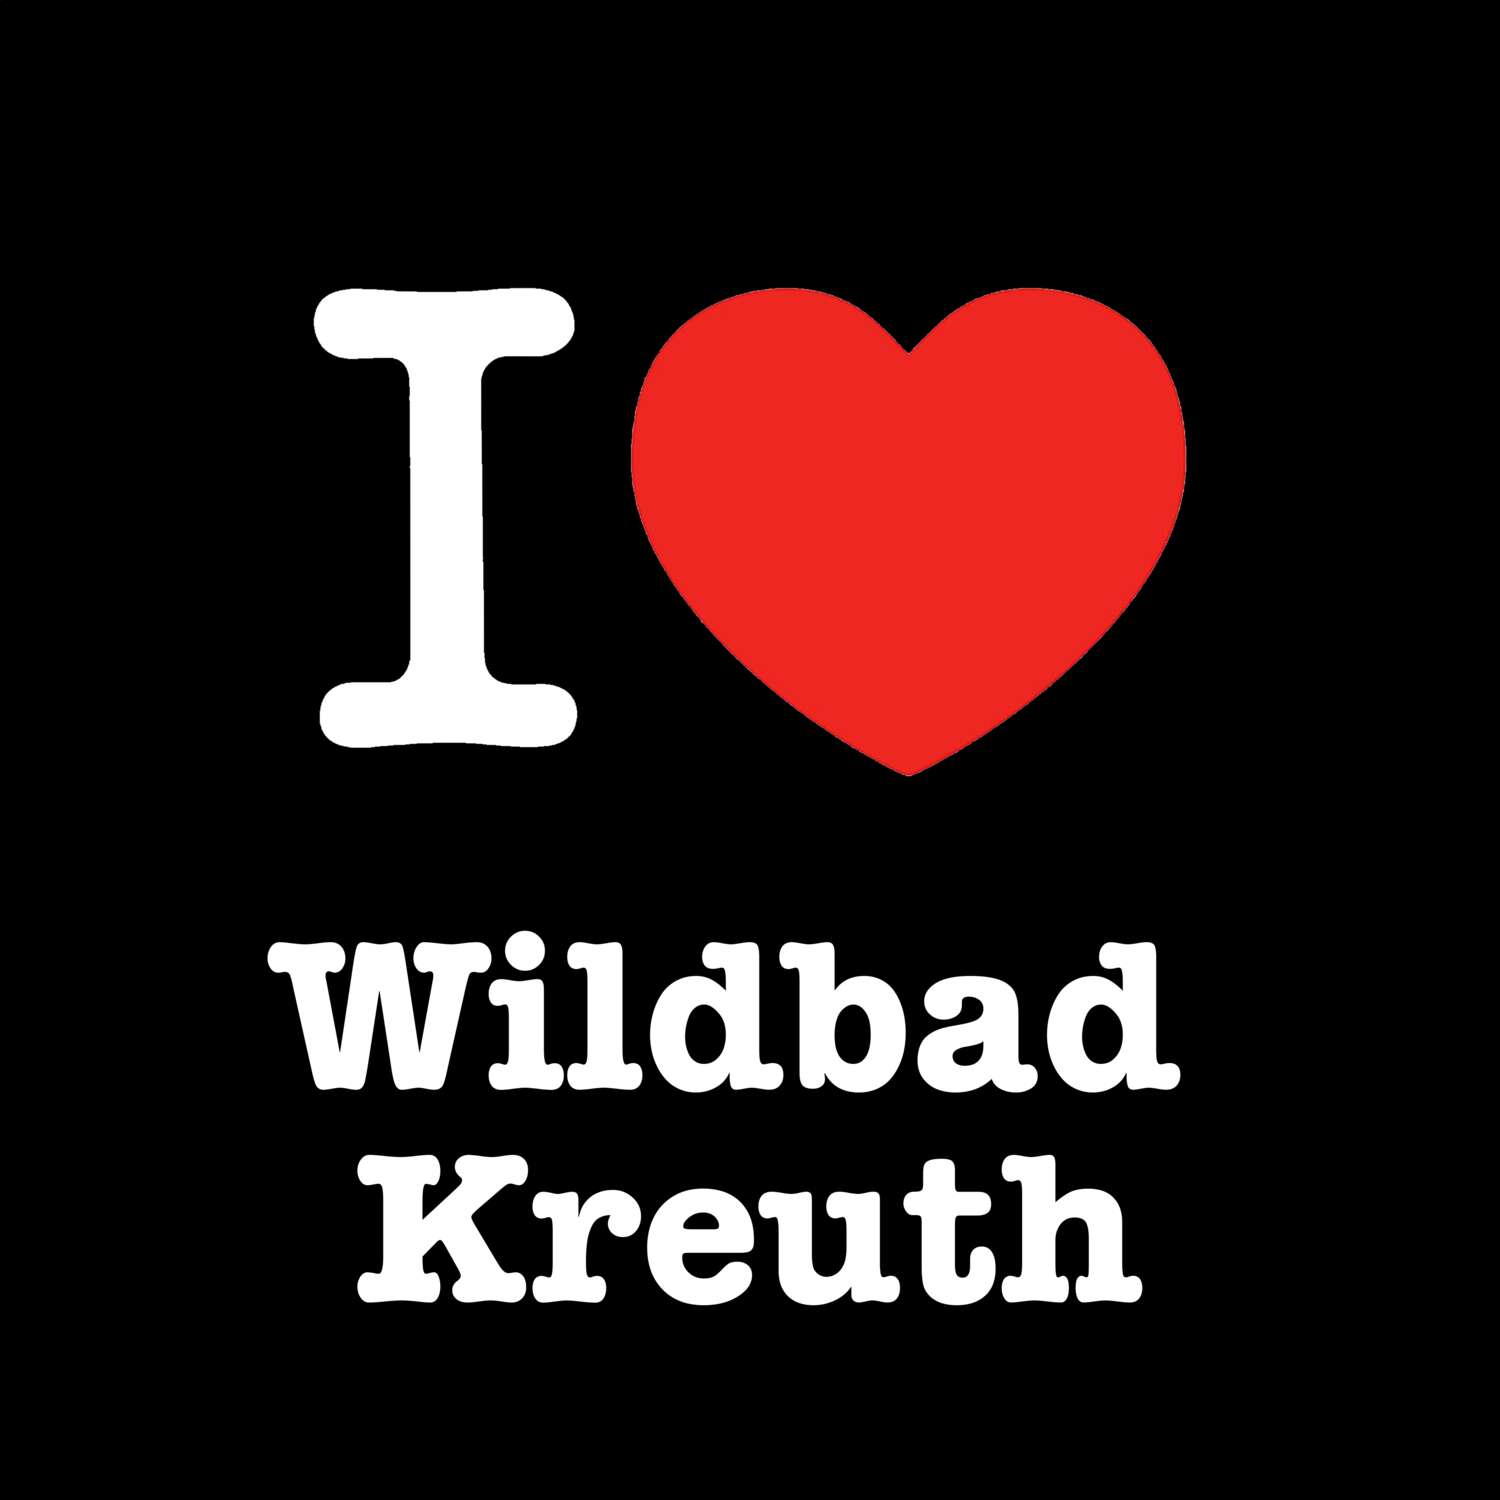 Wildbad Kreuth T-Shirt »I love«